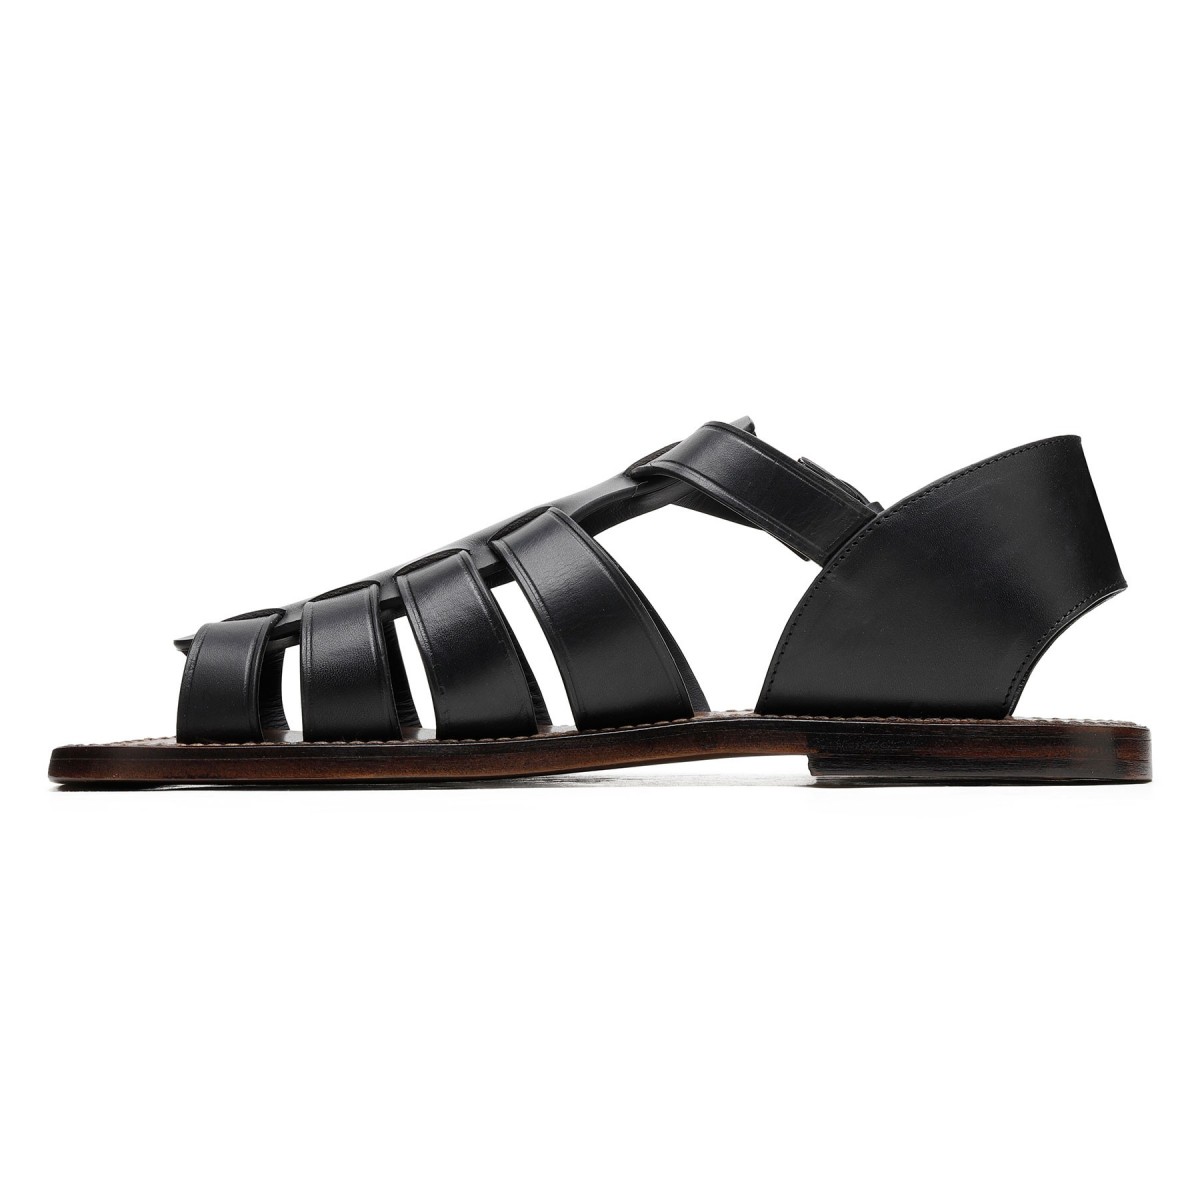 Black leather gladiator sandals